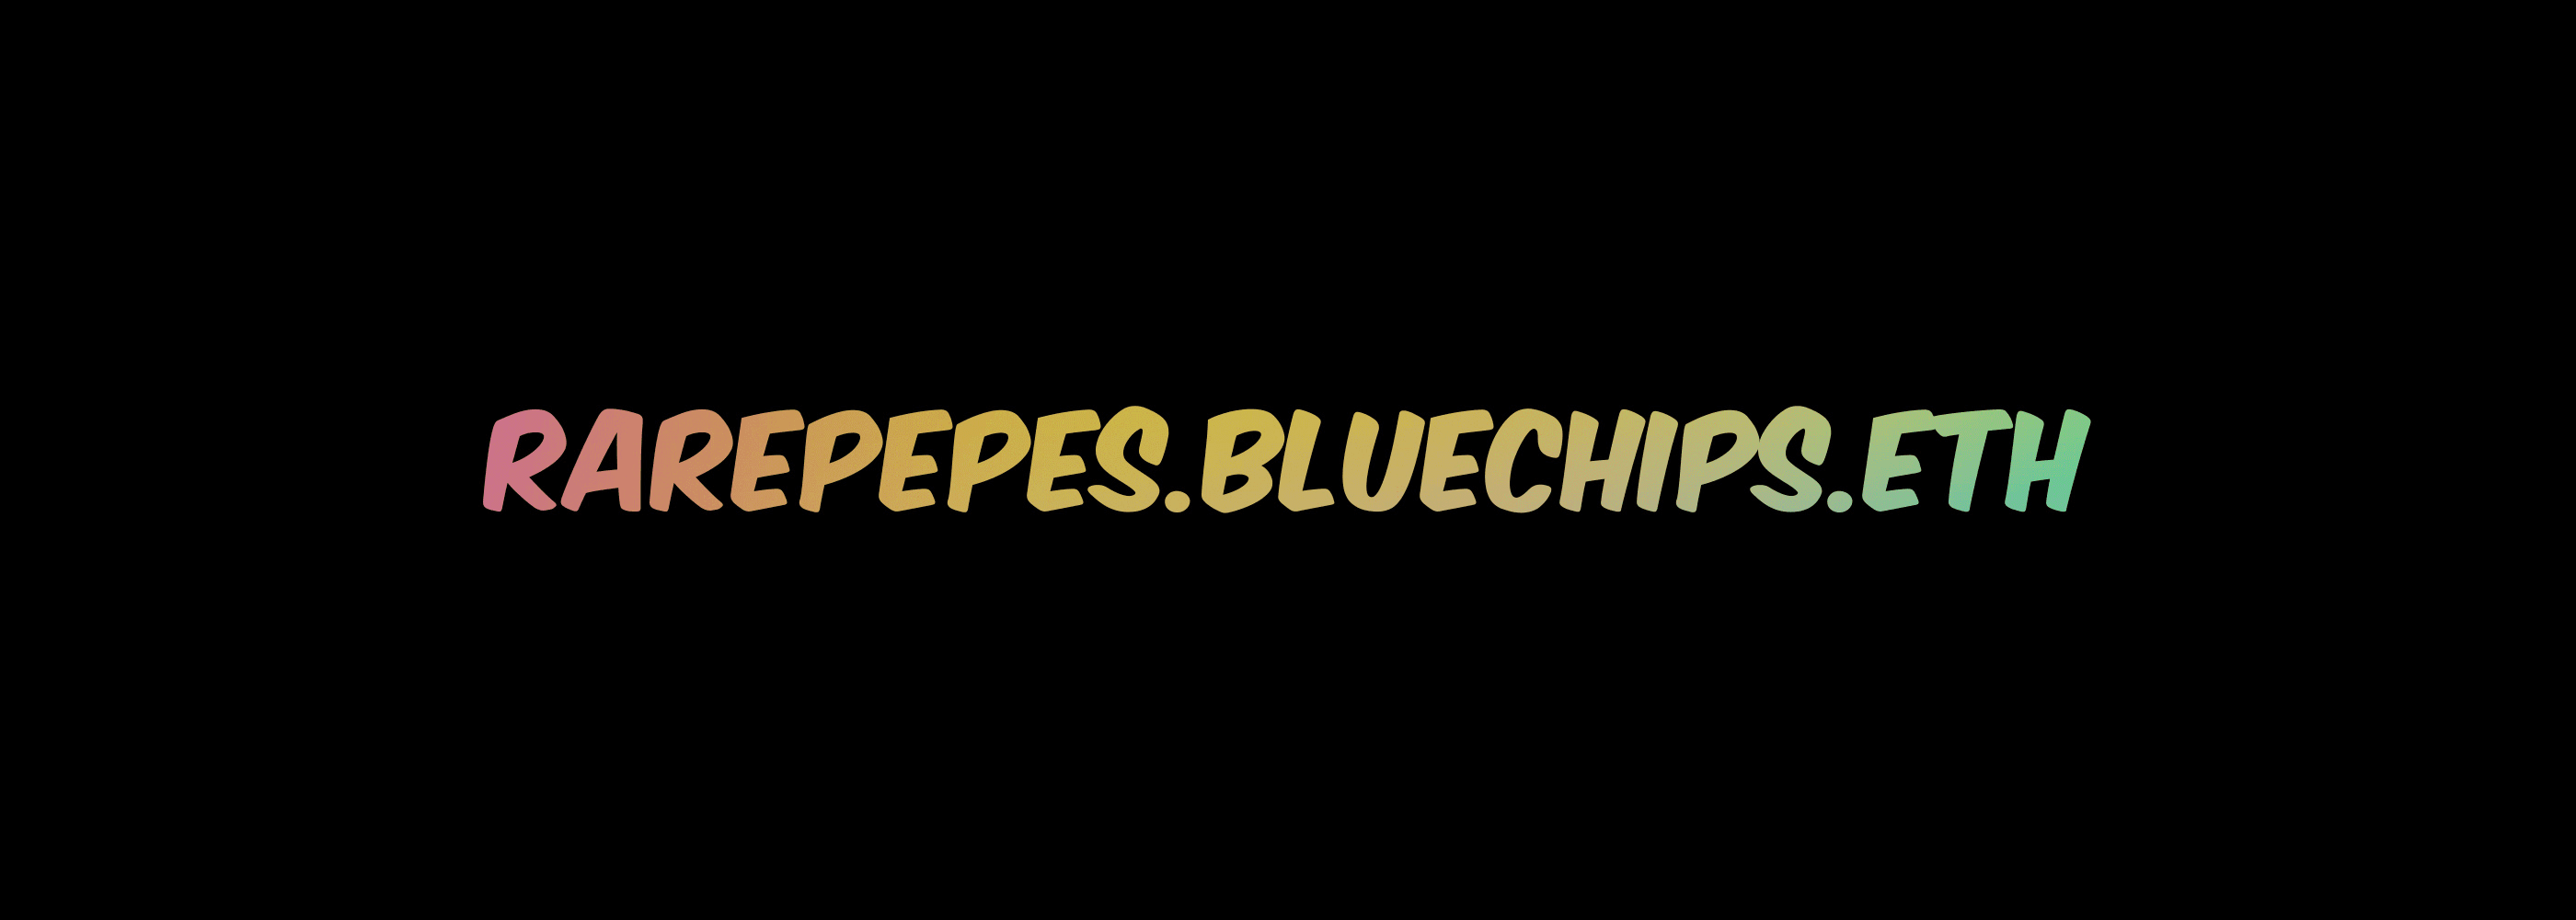 rarepepes.bluechips.eth 横幅